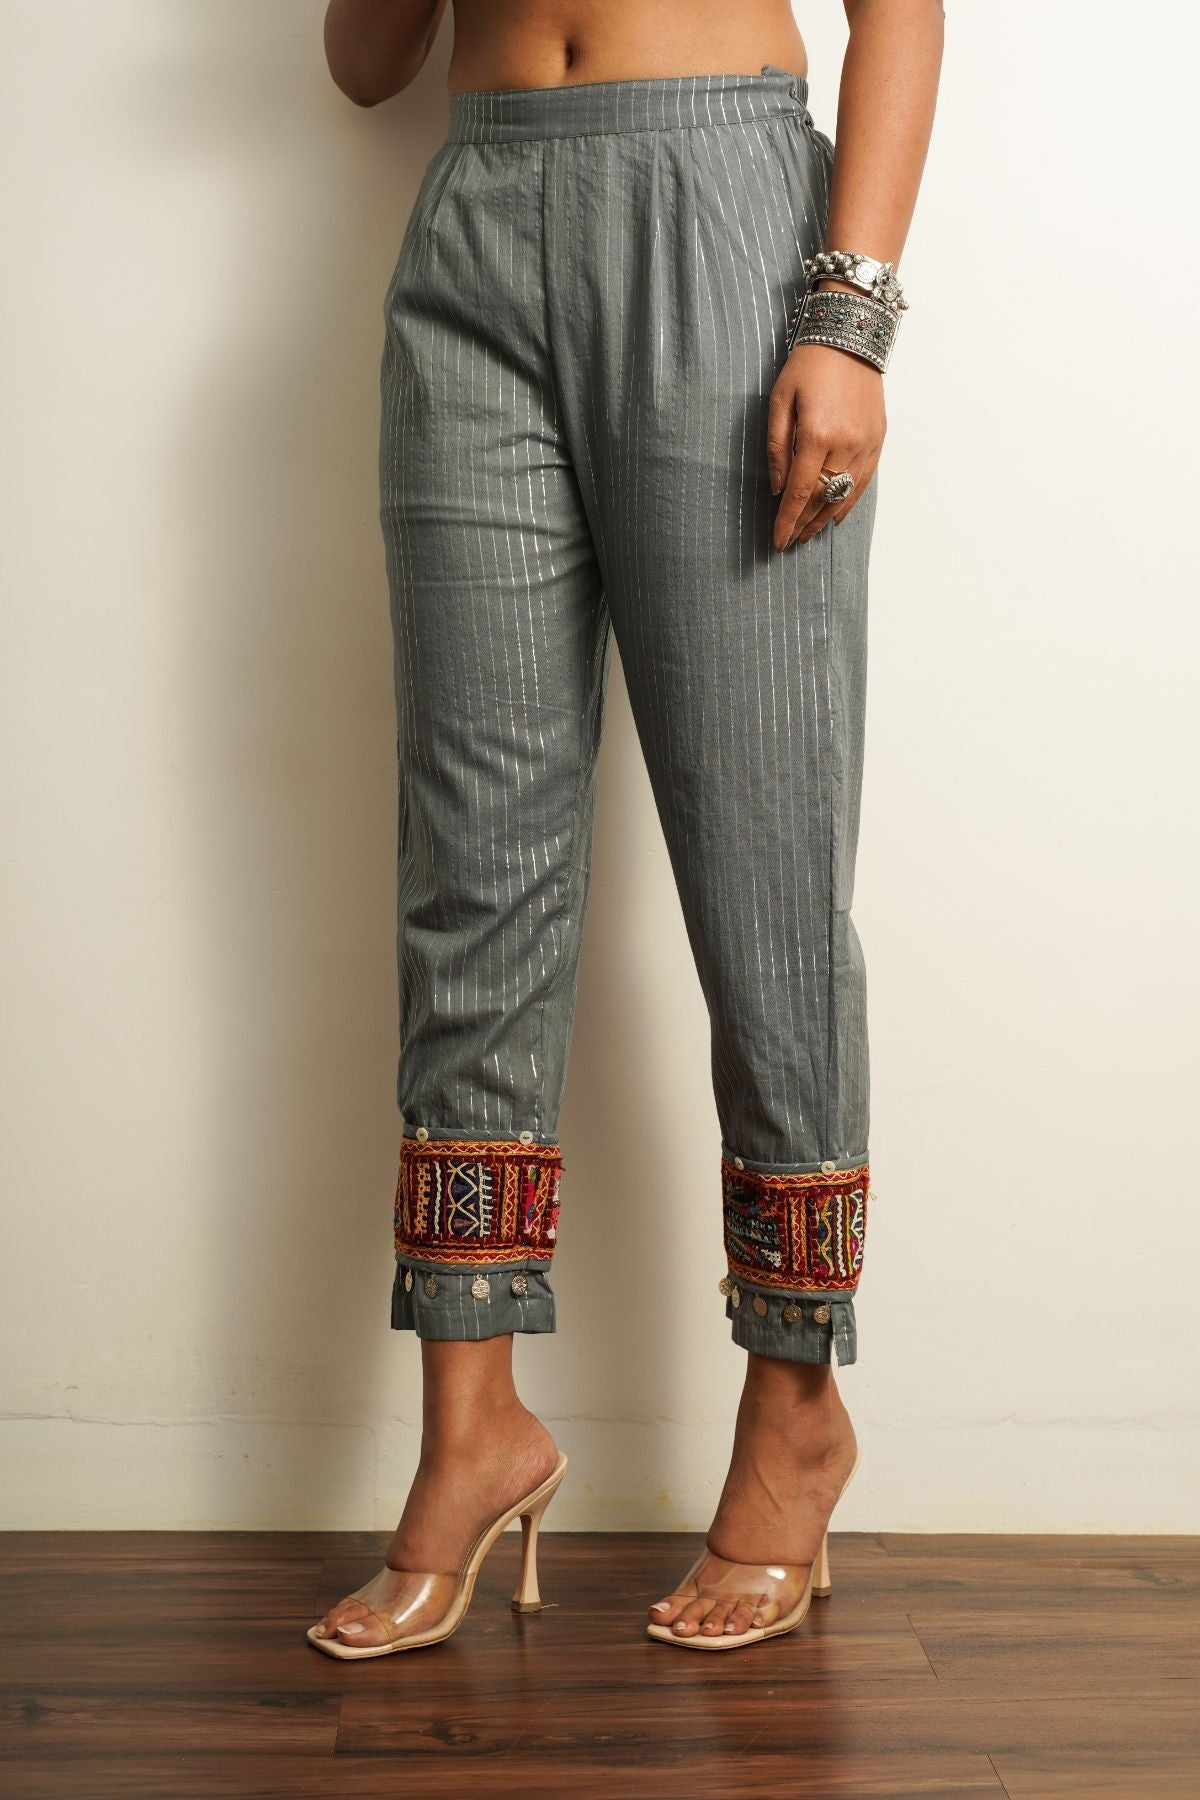 Straight Pants Design For Ladies